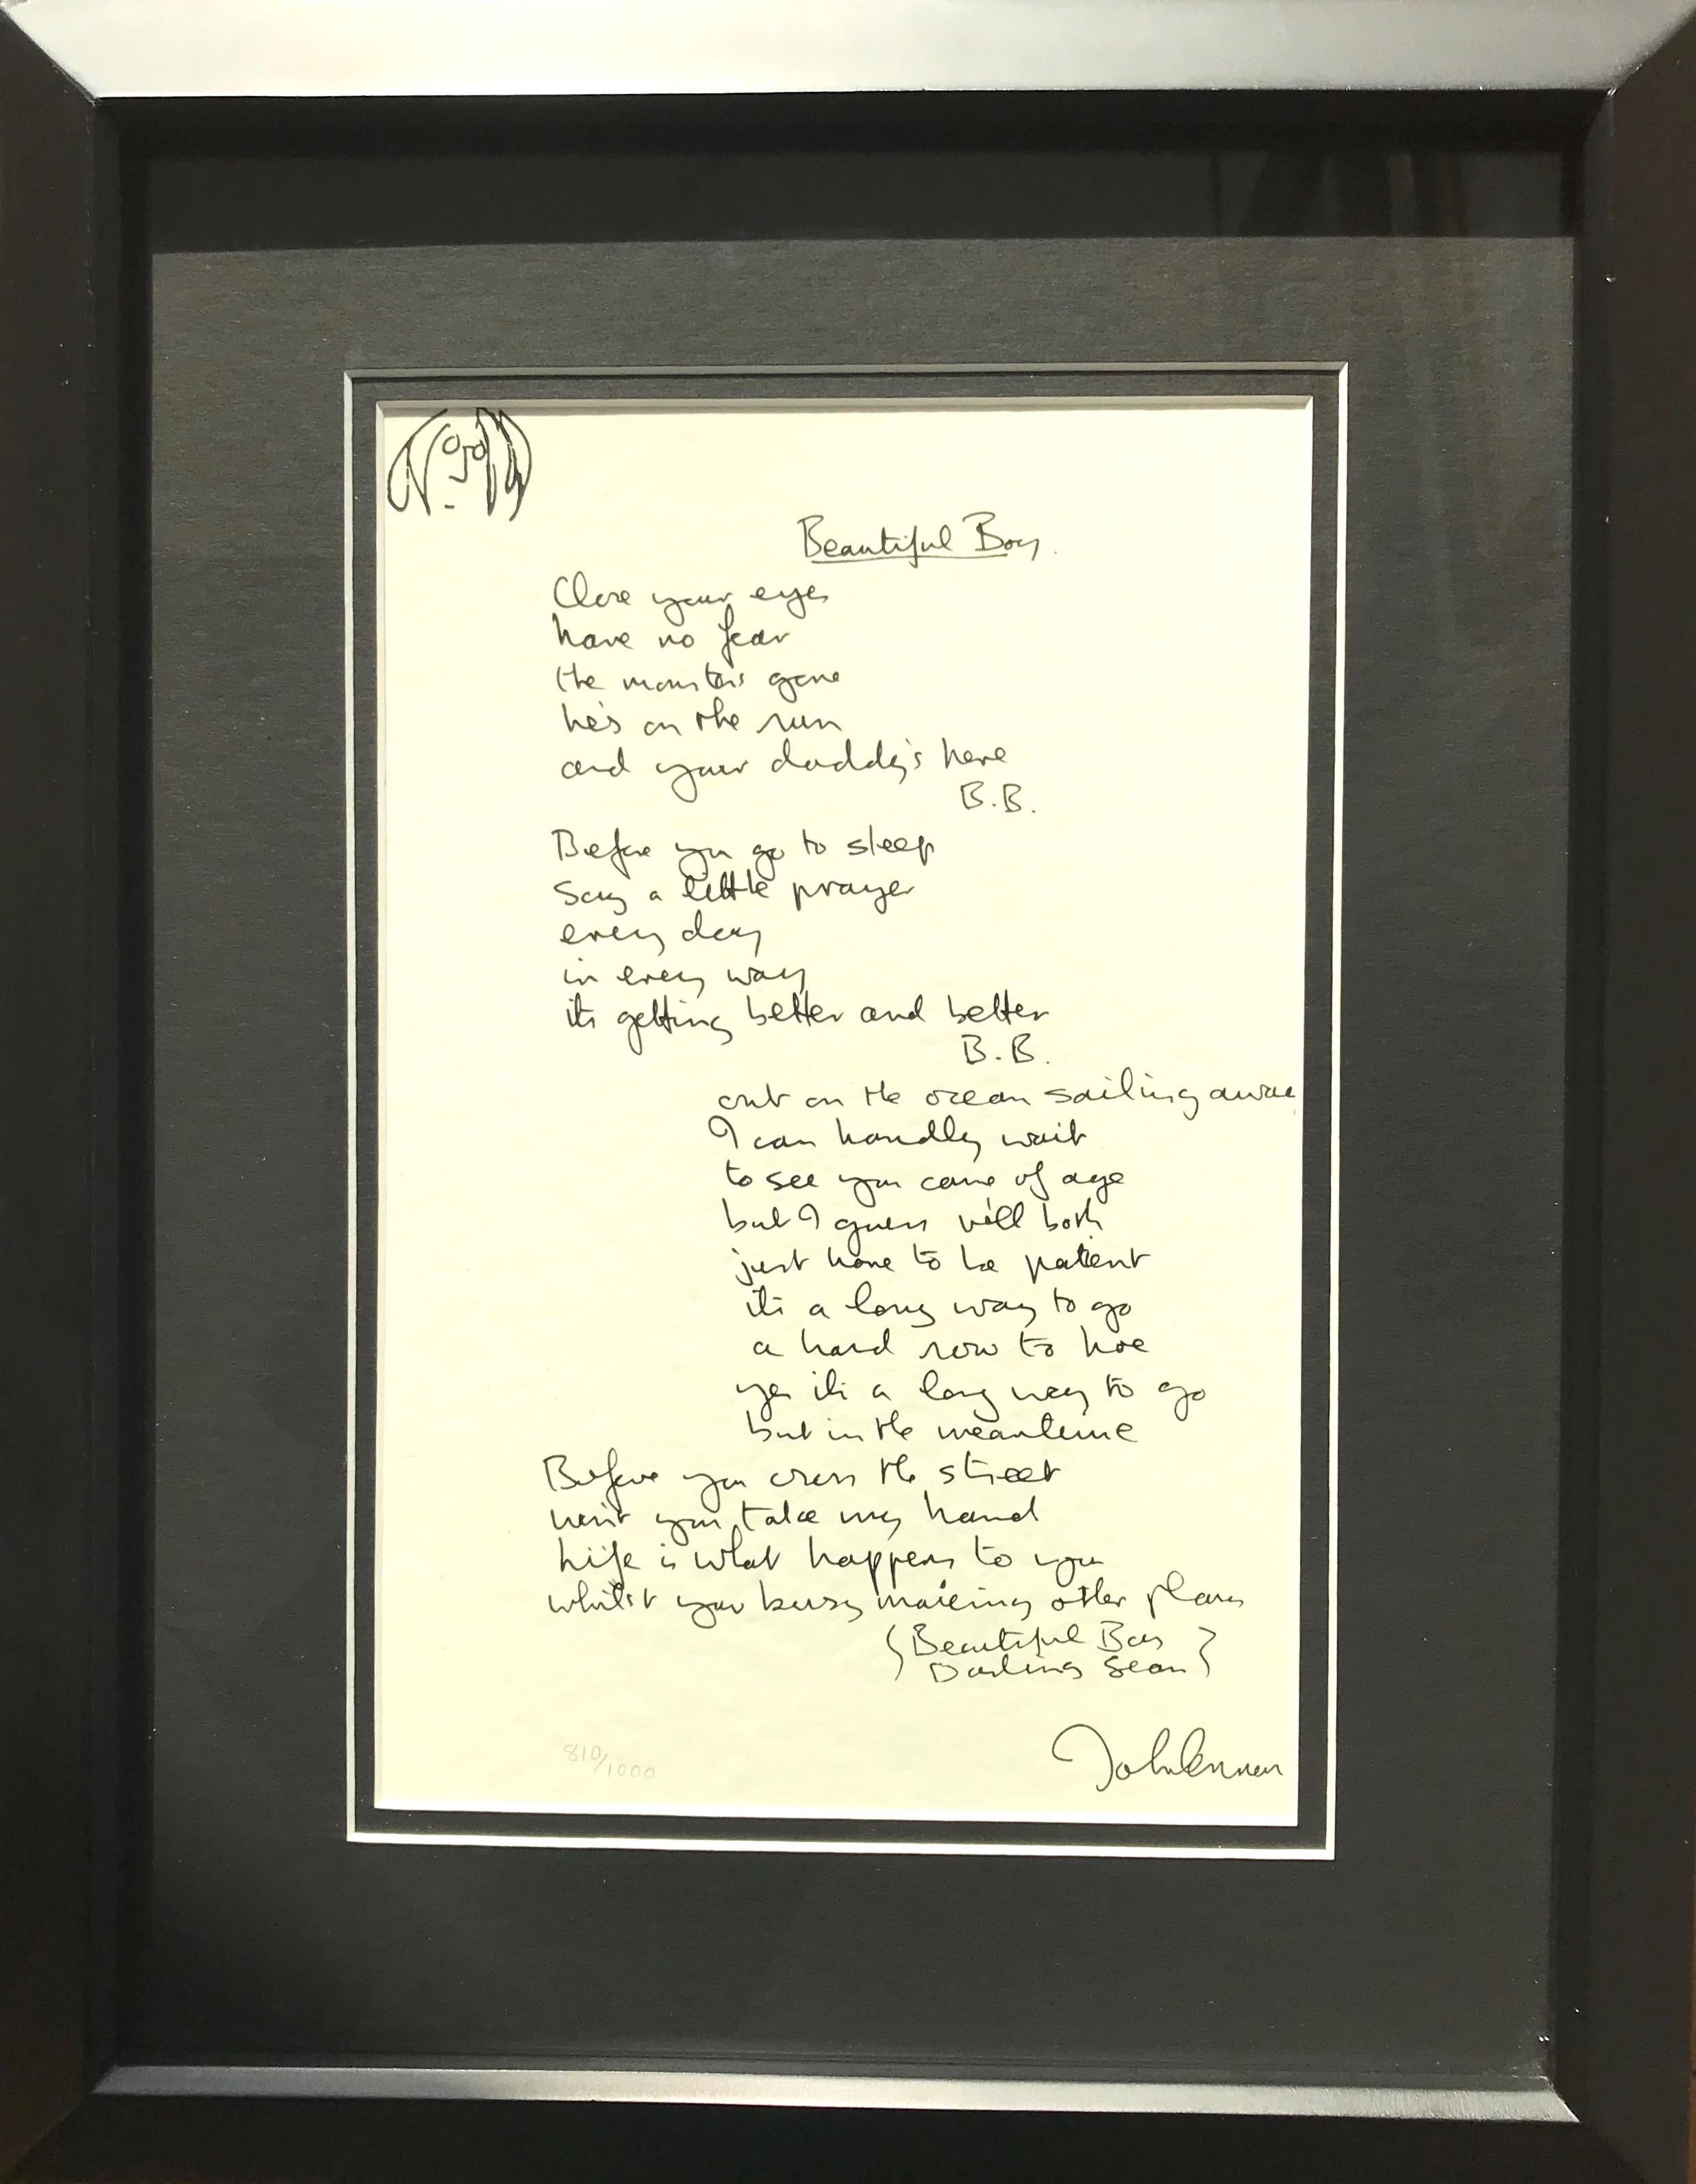 John Lennon Print - "Beautiful Boy" Framed Limited Edition Hand Written Lyrics